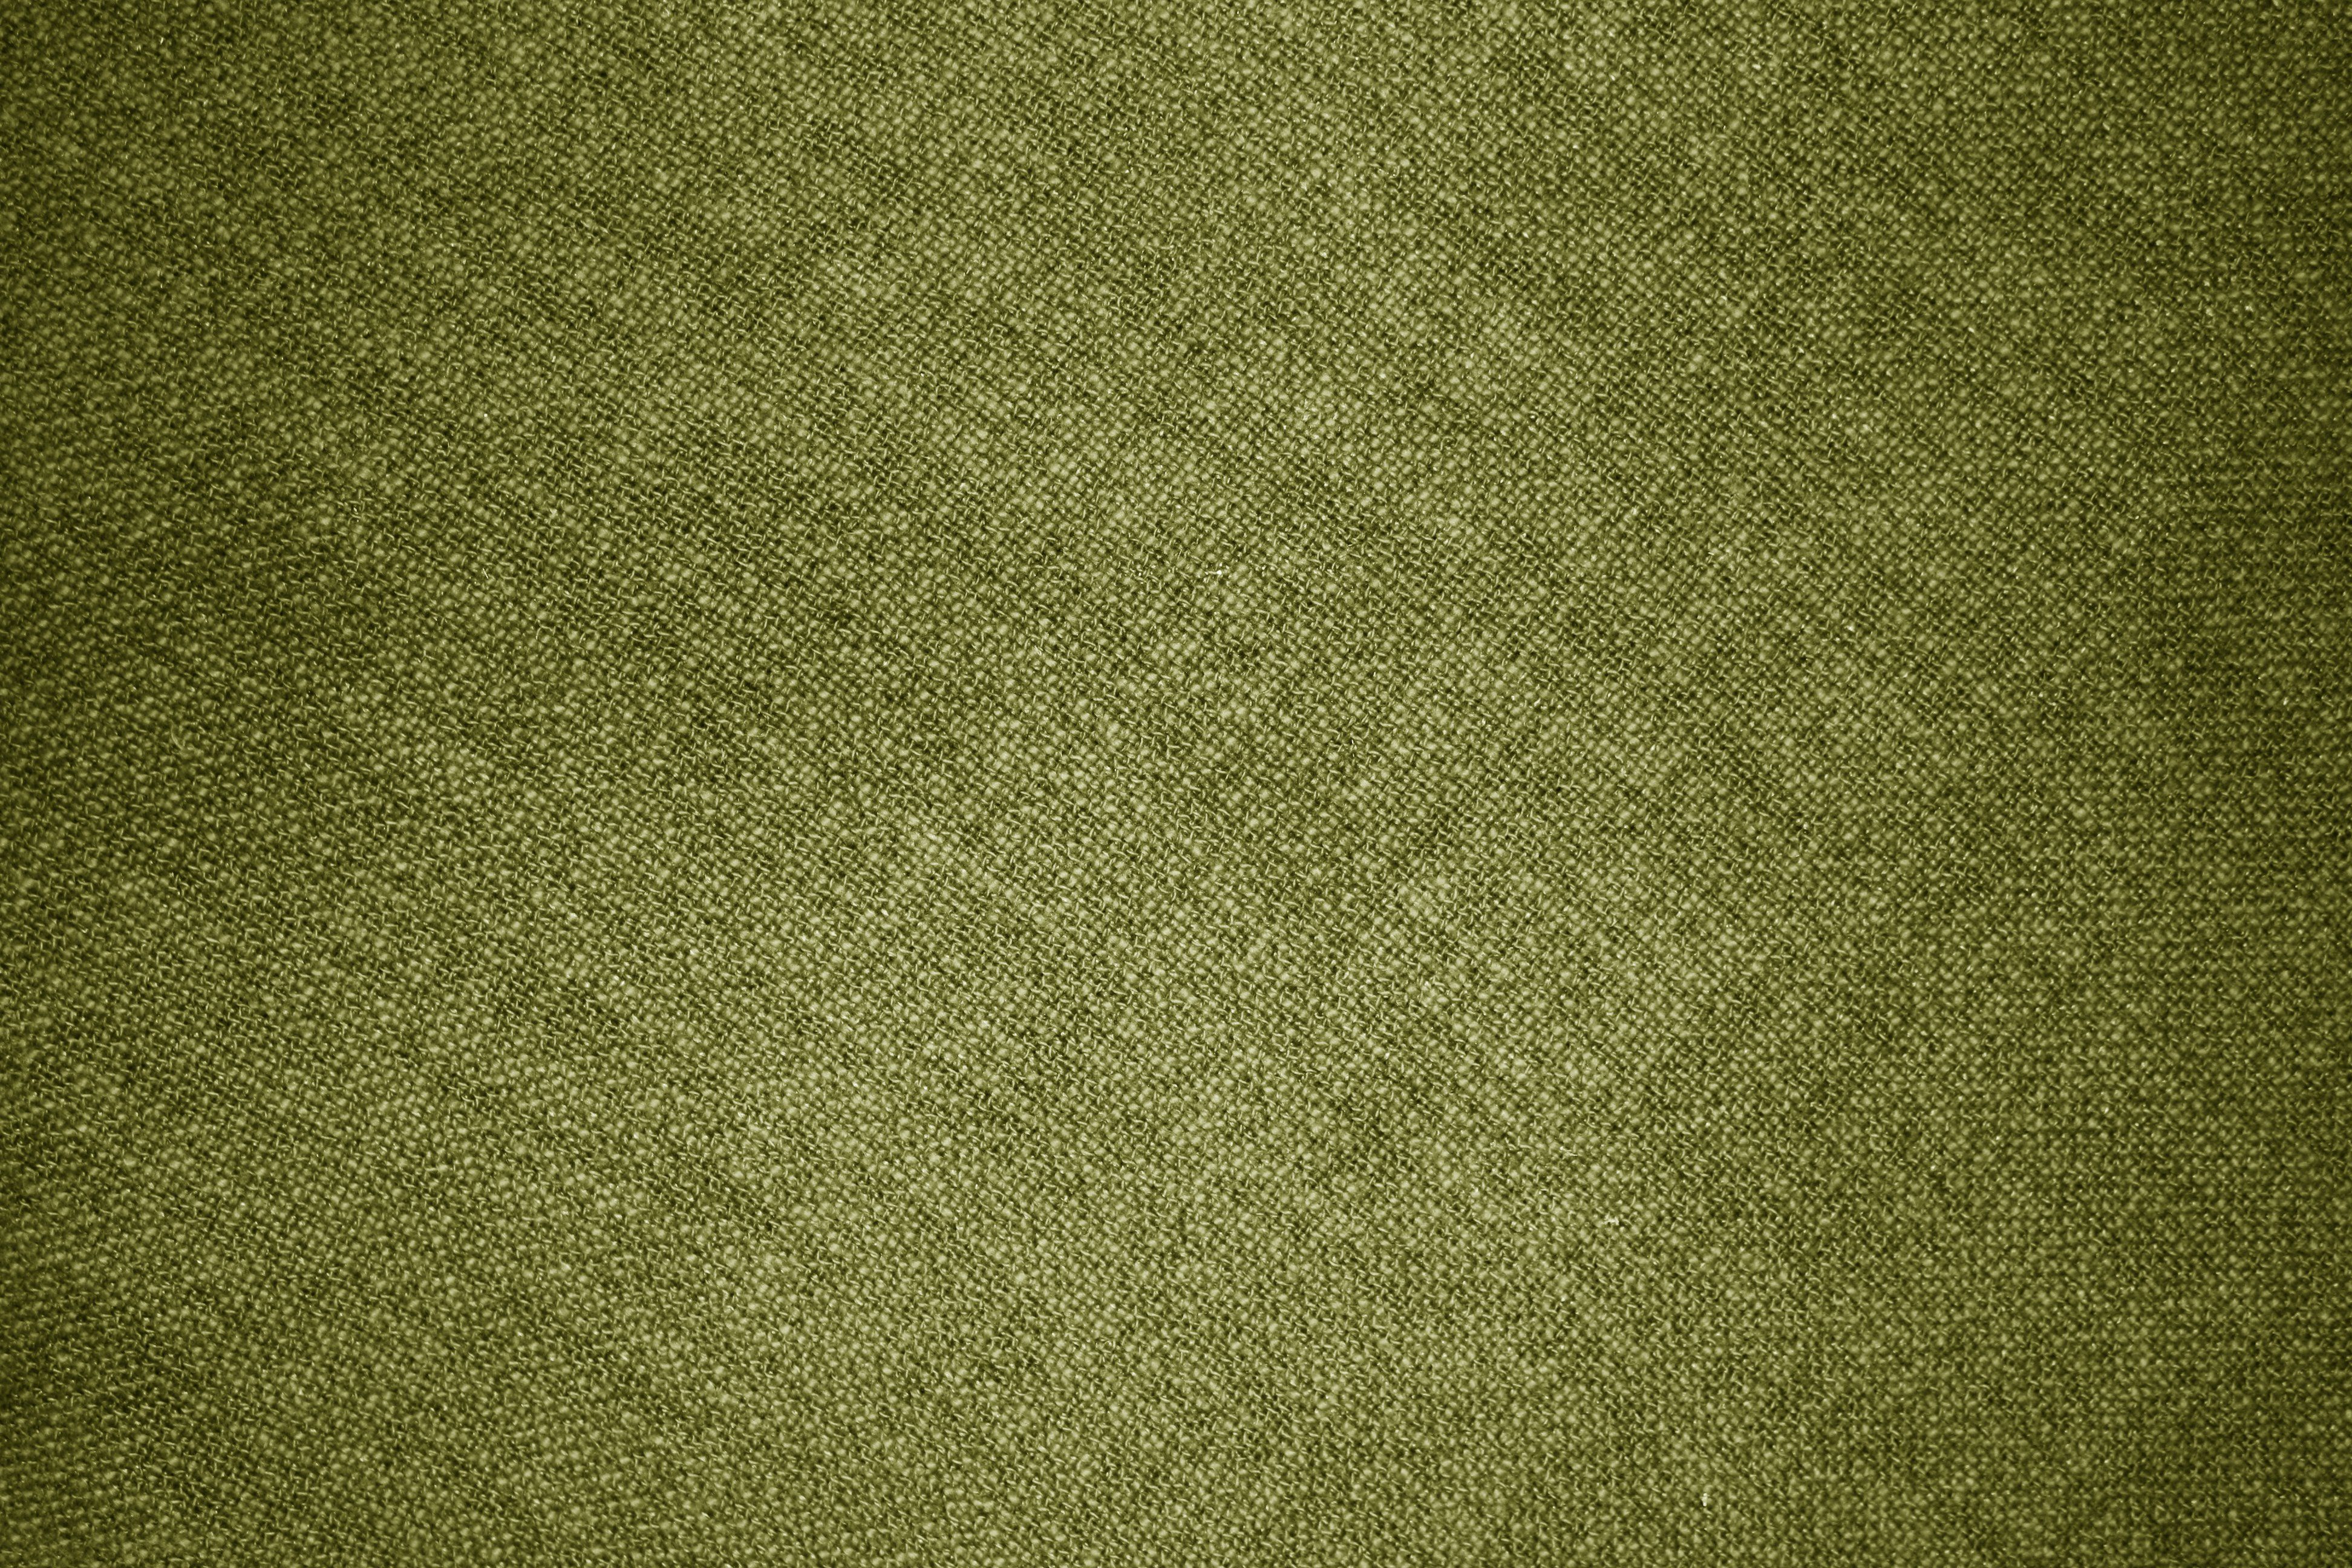 Olive Green Textured Wallpaper